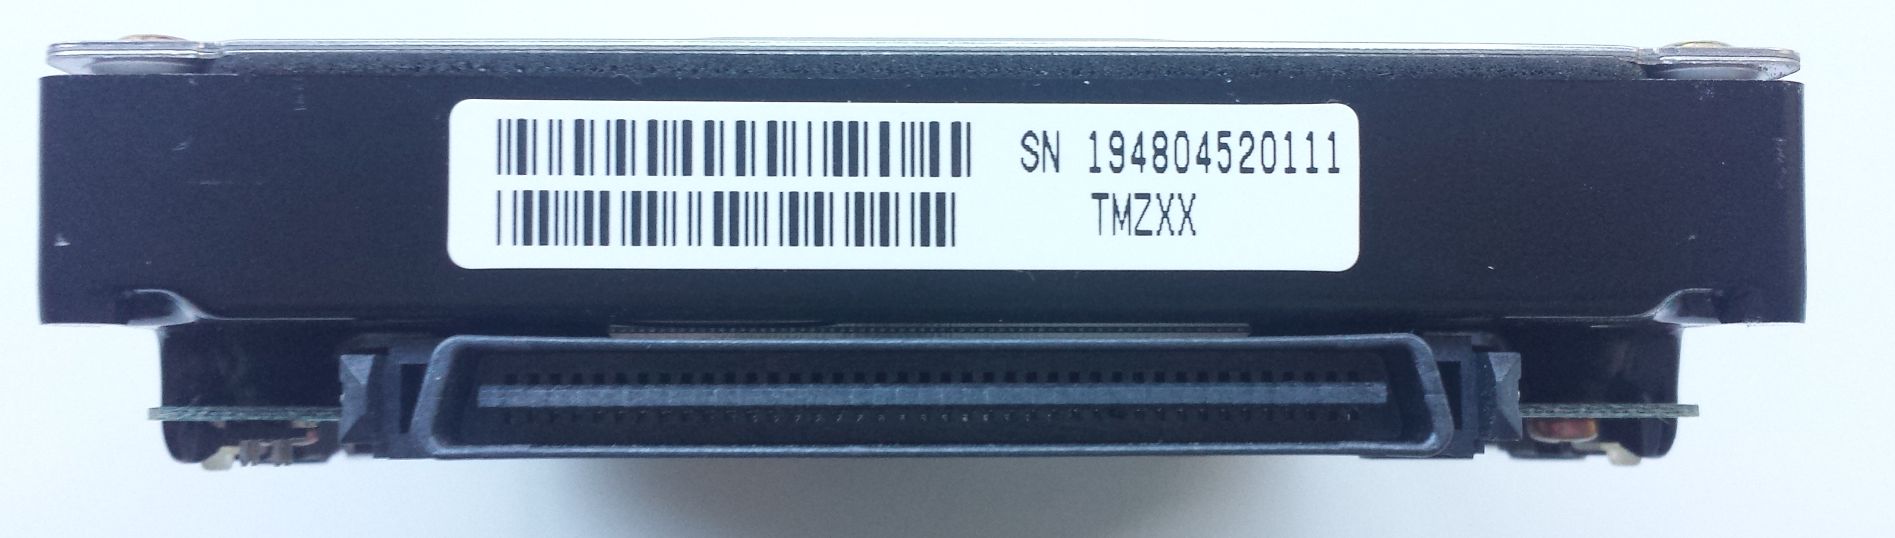 HDD SCSI Ultra-2 80pins 3